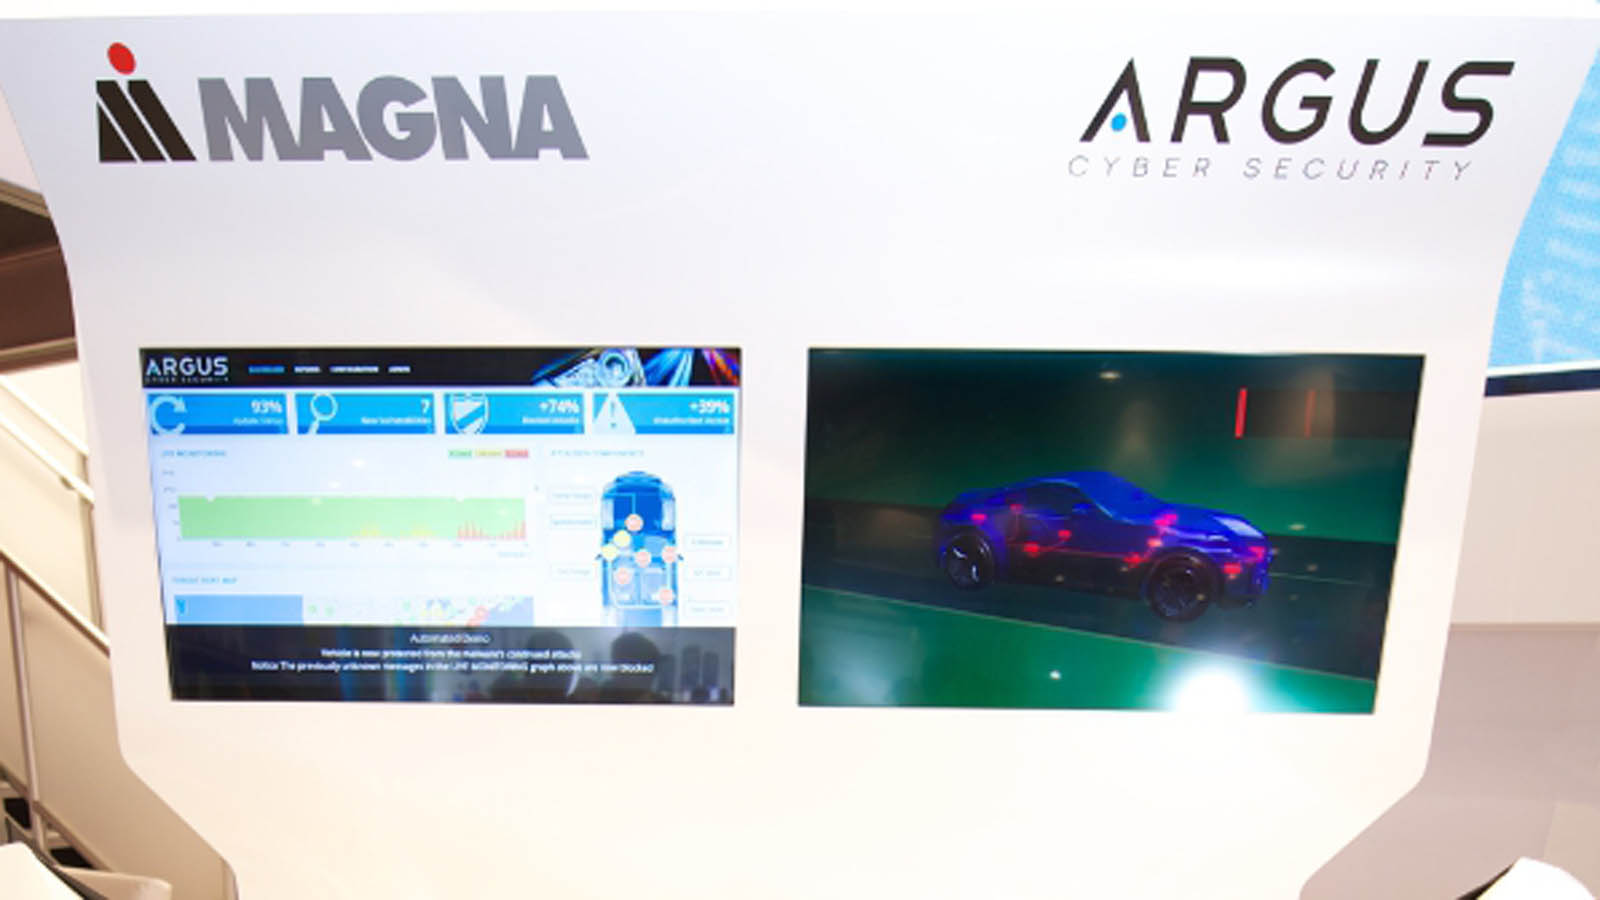 Magna Argus cyber security technology demonstration (PRNewsFoto/Magna International of America)